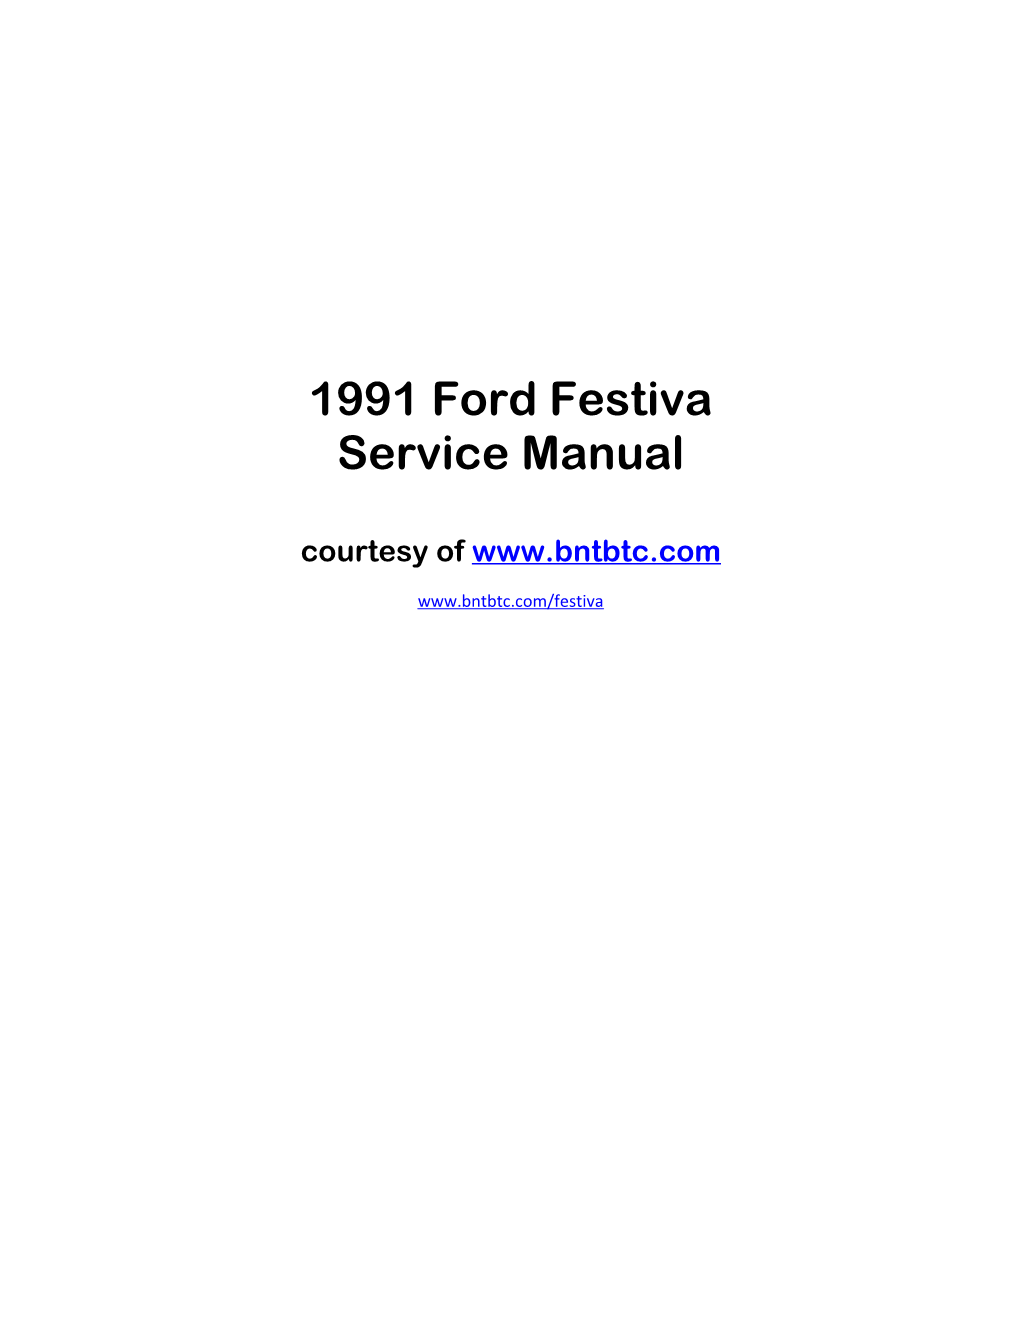 1991 Ford Festiva Service Manual Courtesy Of